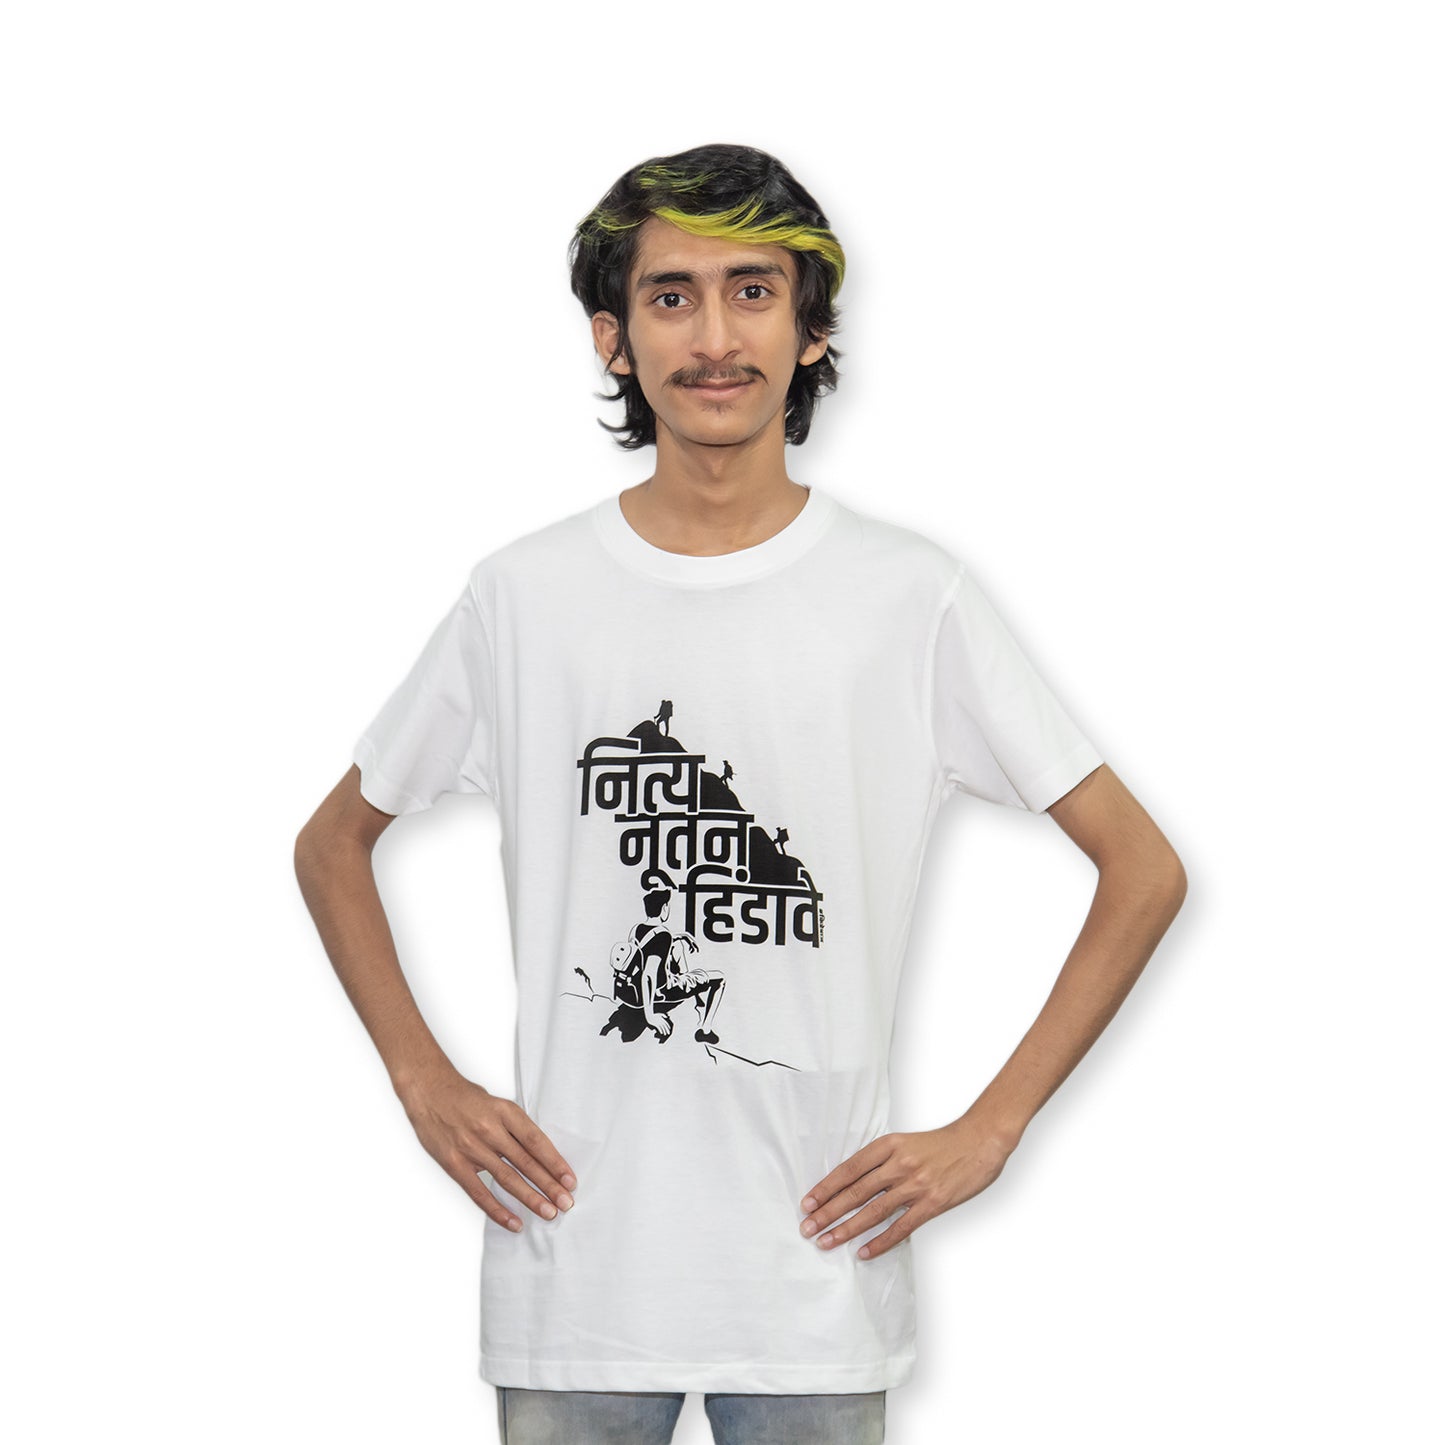 Nitya Nutan Hindawe T-Shirt - Kidebaj